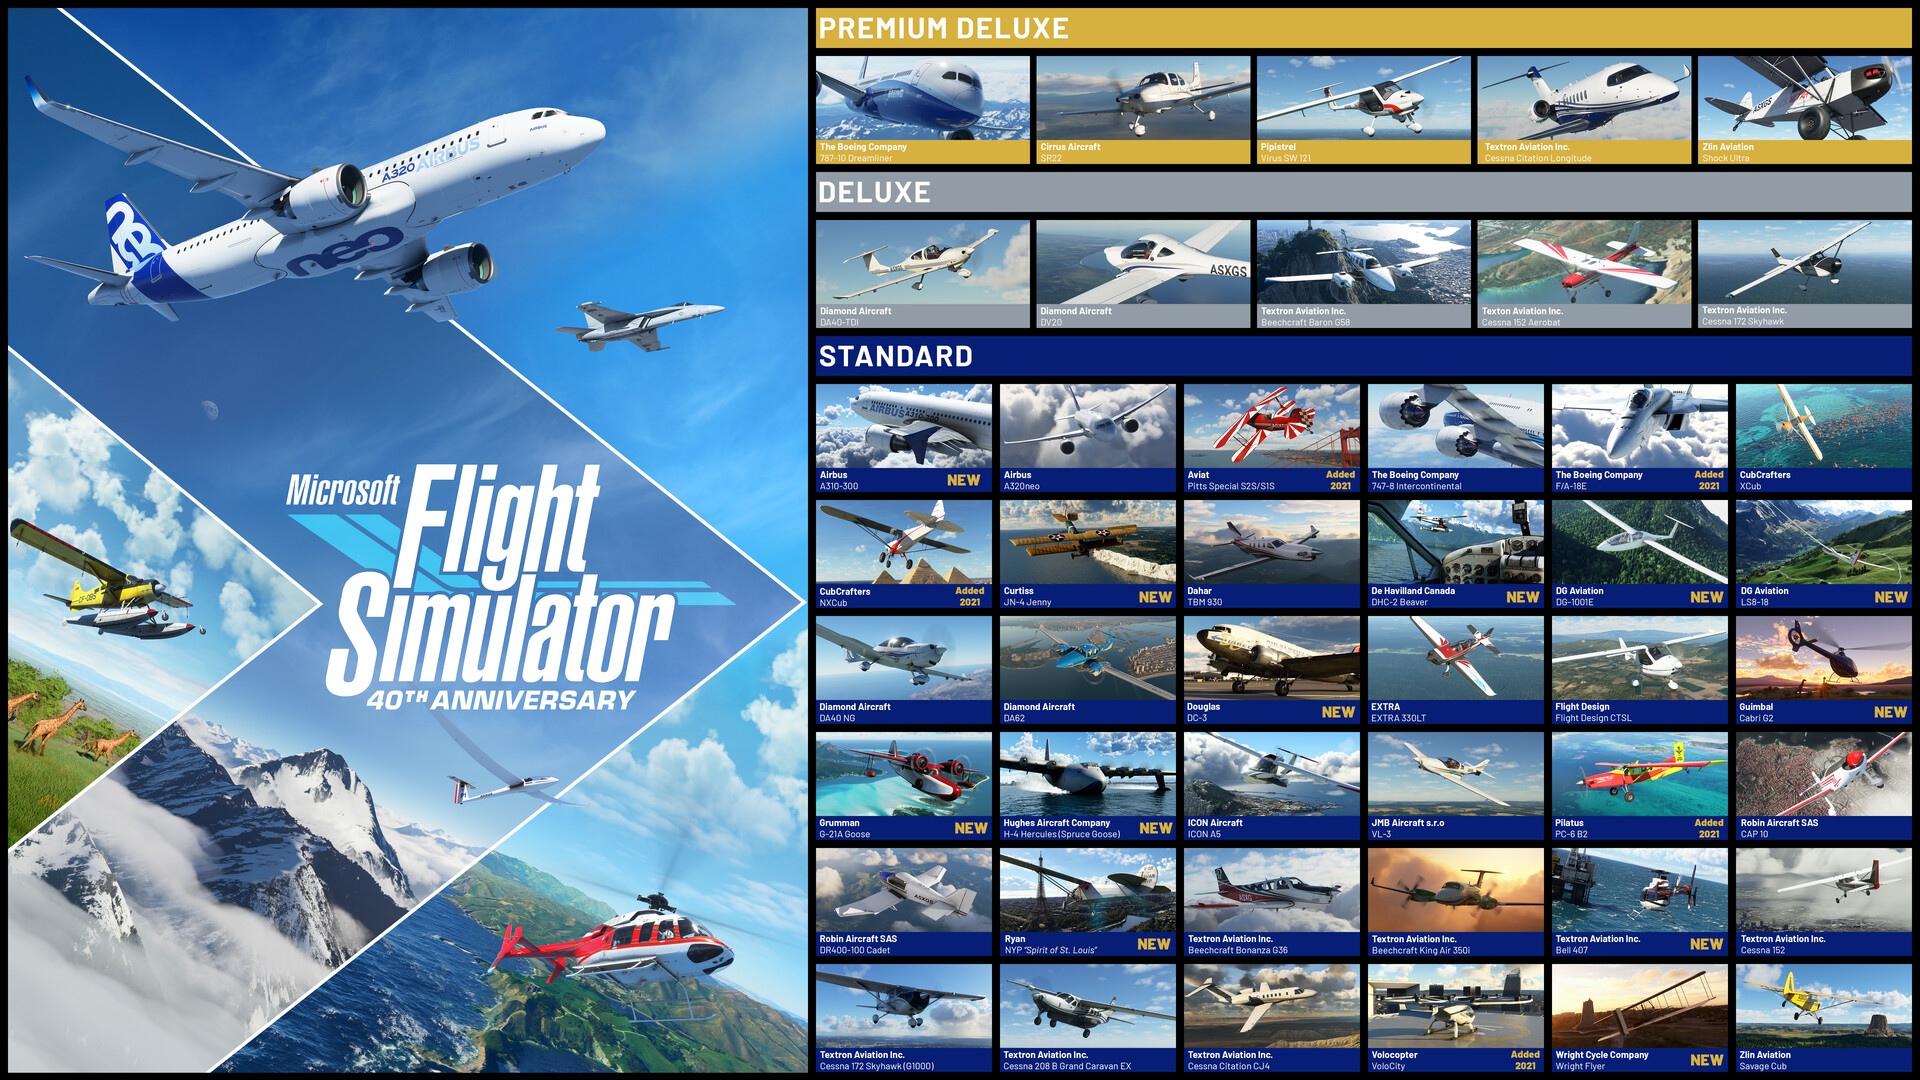 Find the best laptops for Microsoft Flight Simulator